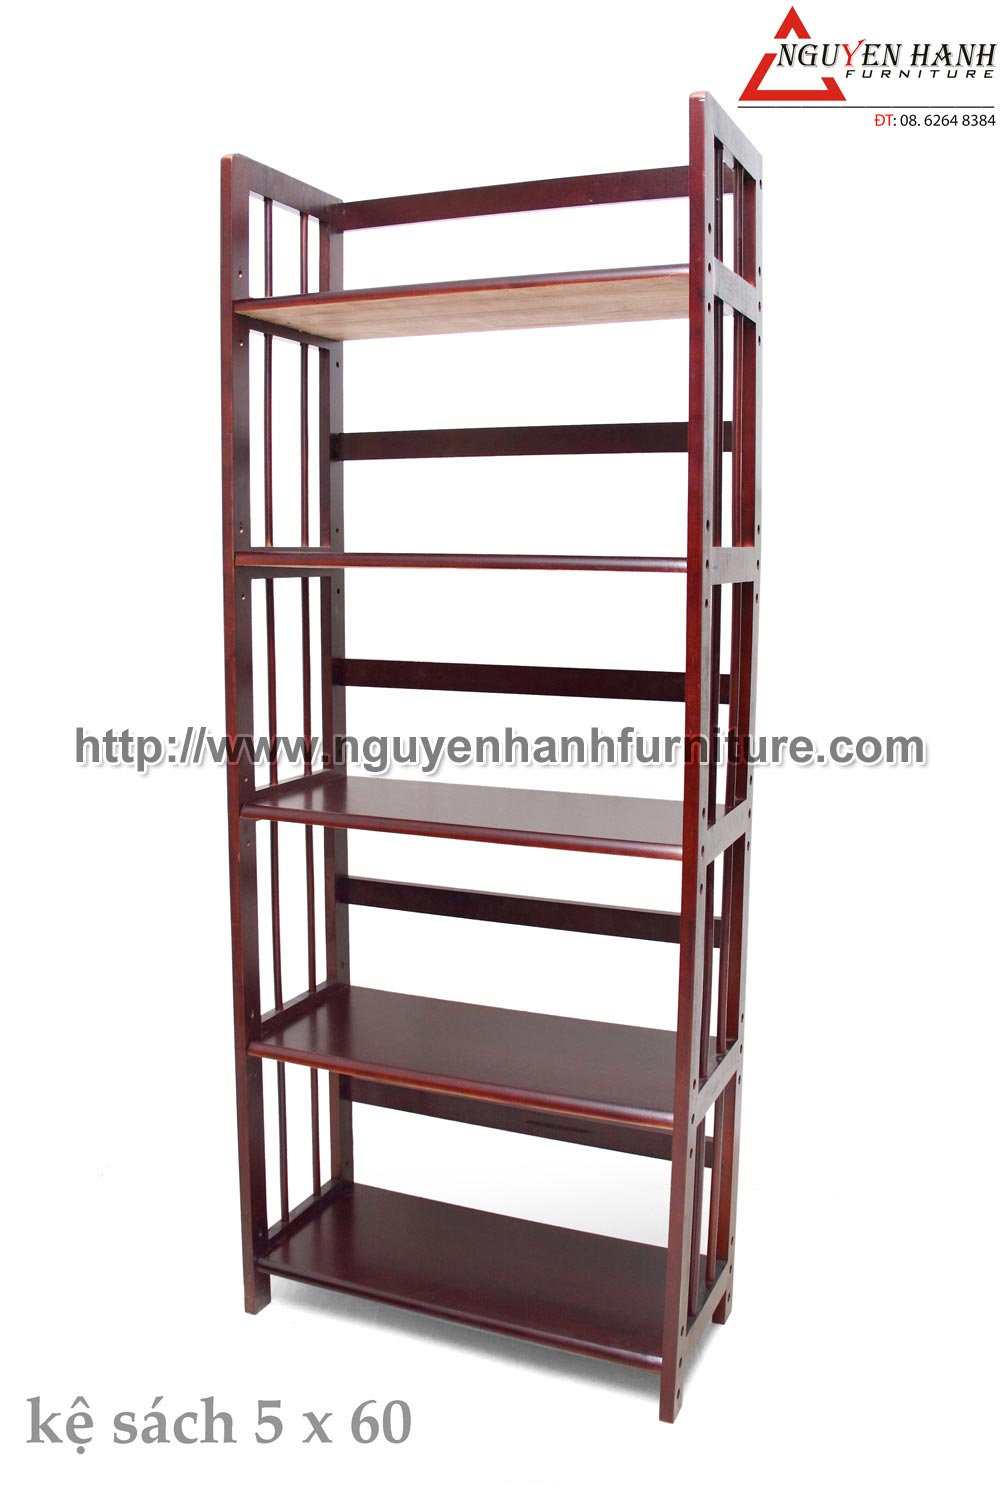 Name product: 5 storey Adjustable Bookshelf 60 (black) - Dimensions: 60 x 28 x 157 (H) - Description: Wood natural rubber